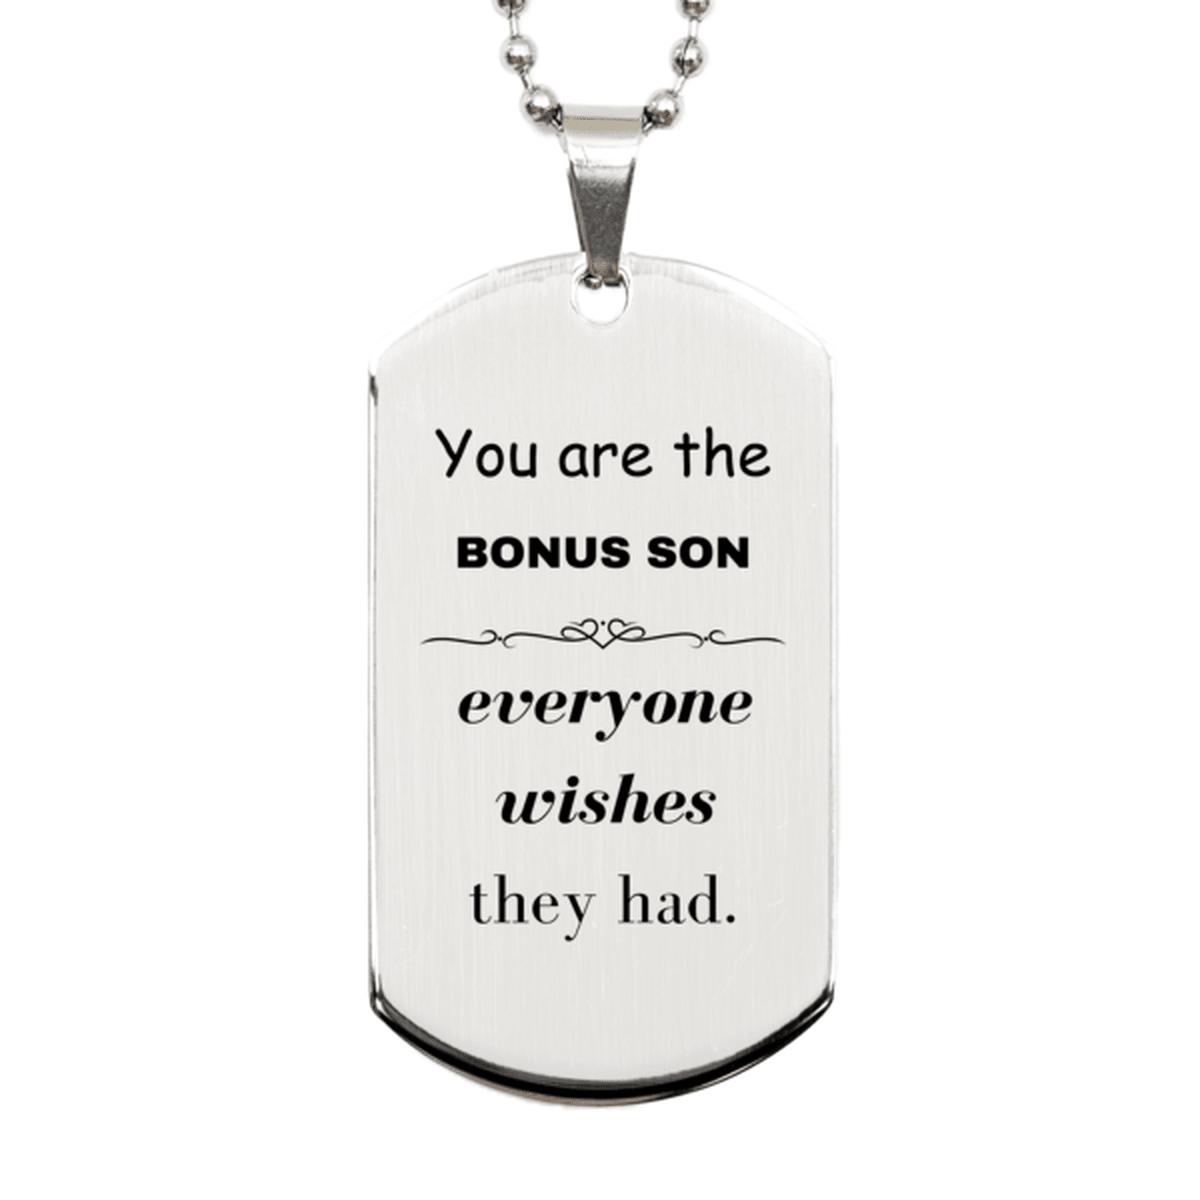 Bonus Son Silver Dog Tag, Everyone wishes they had, Inspirational Dog Tag Necklace For Bonus Son, Bonus Son Gifts, Birthday Christmas Unique Gifts For Bonus Son - Mallard Moon Gift Shop